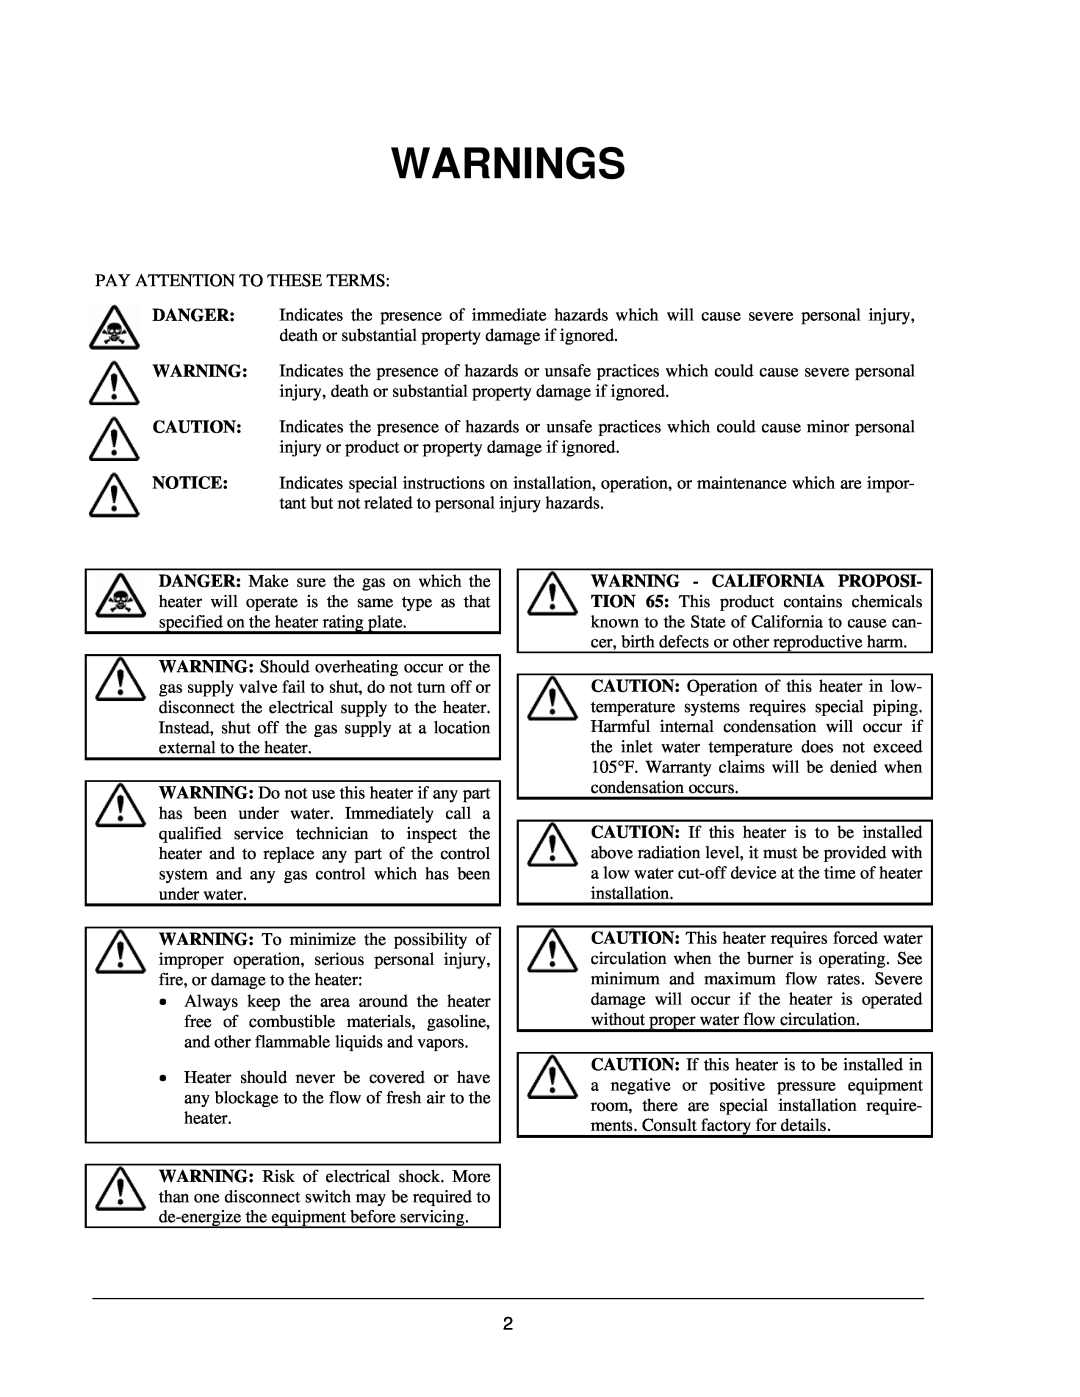 Raypak 503-2003 manual Warnings 